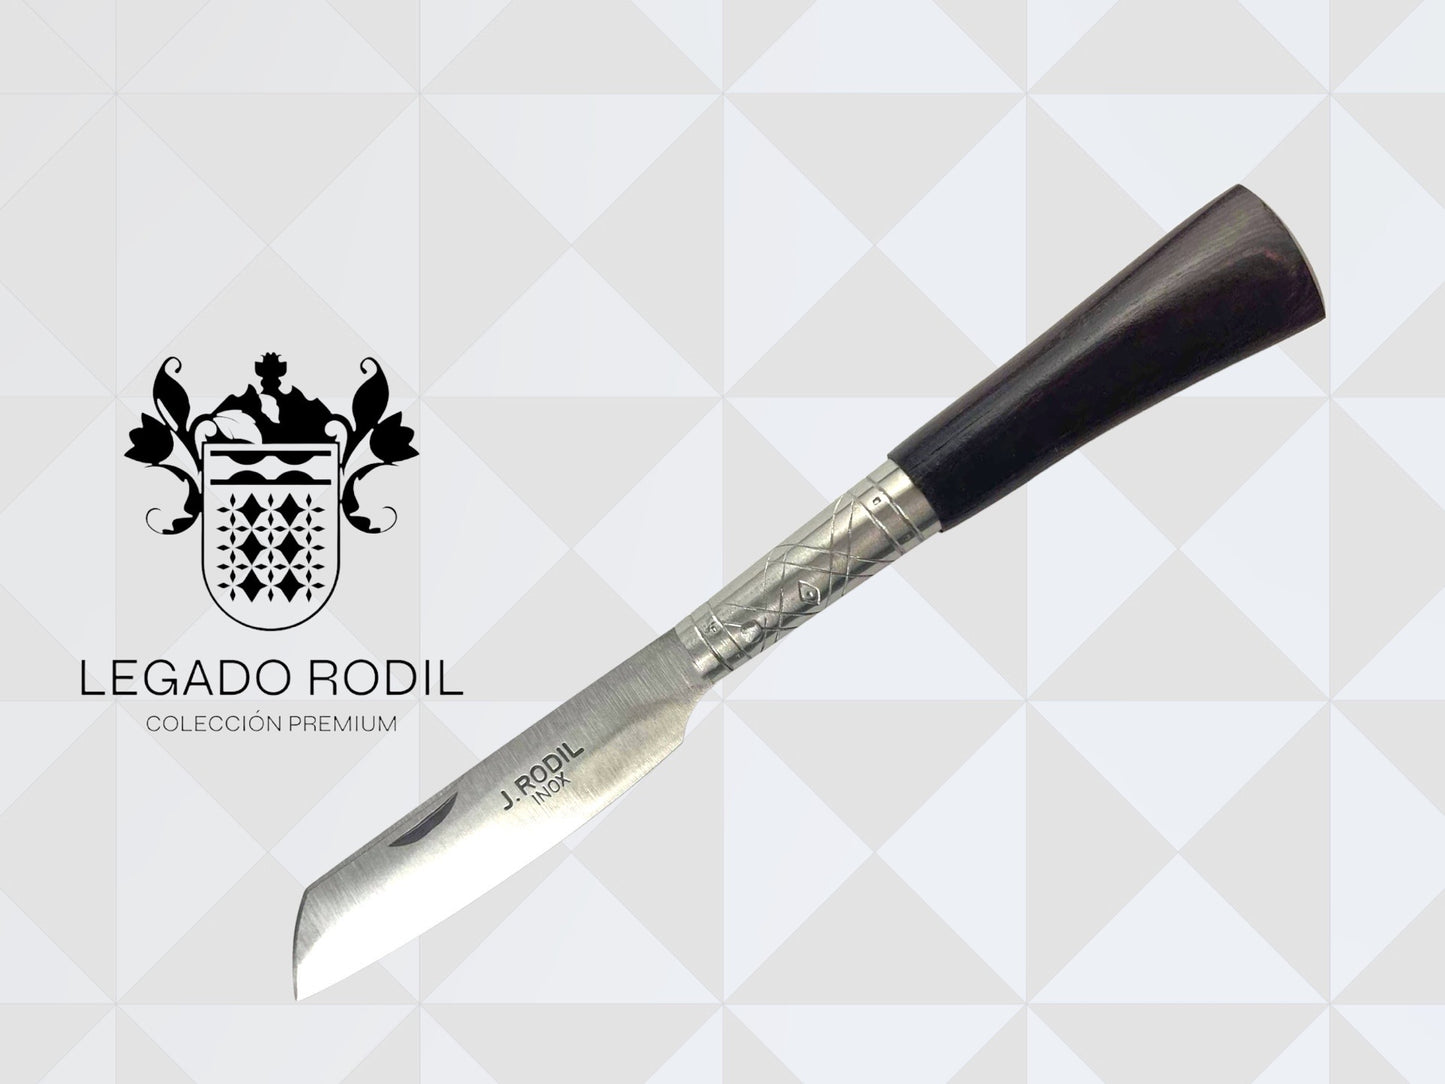 Legado Rodil Modèle II - Améthyste - Collection Premium, bois de palo violeta, maître artisan José Rodil